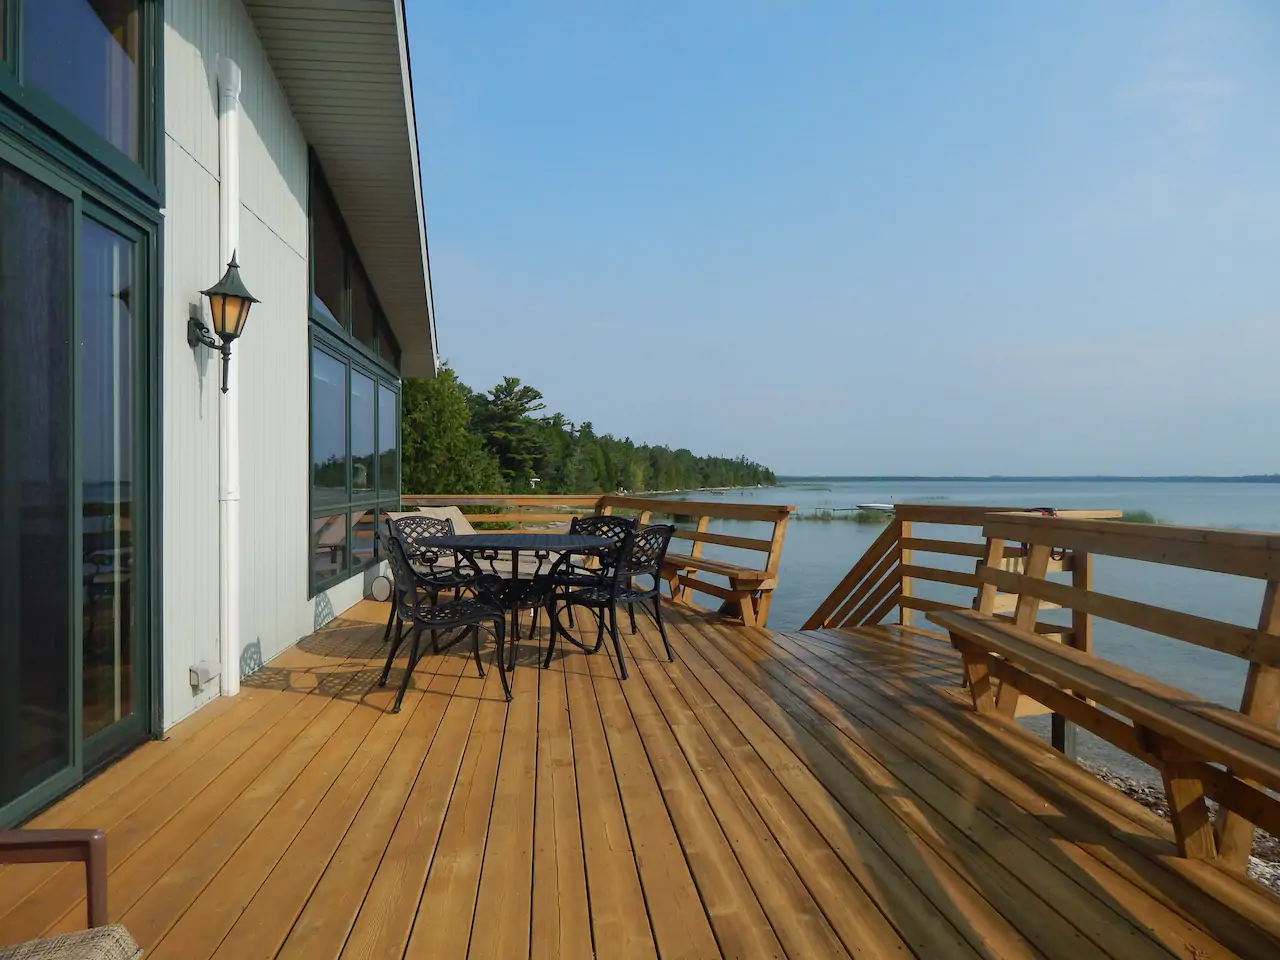 Beautiful wooden deck overlooking Lake Michigan in Bailey's Harbor, WI.